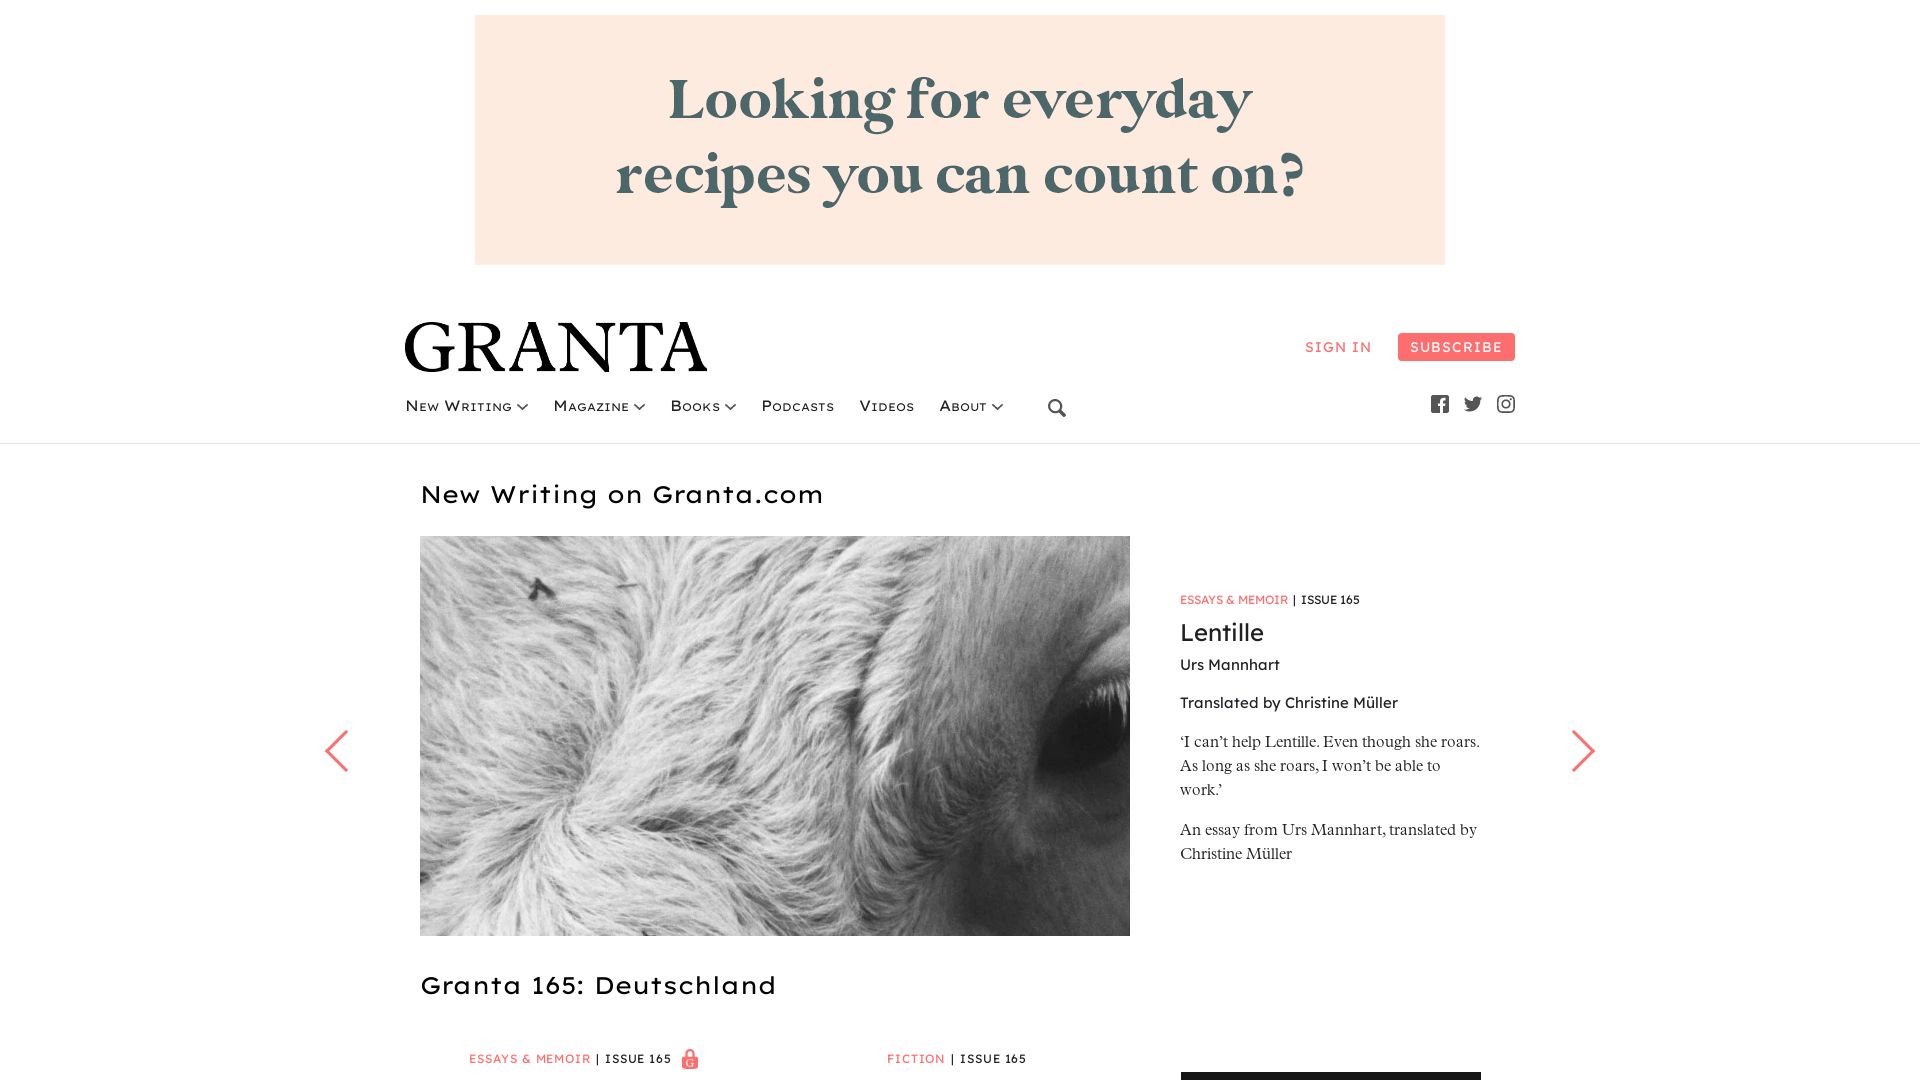 Website status granta.com is   ONLINE